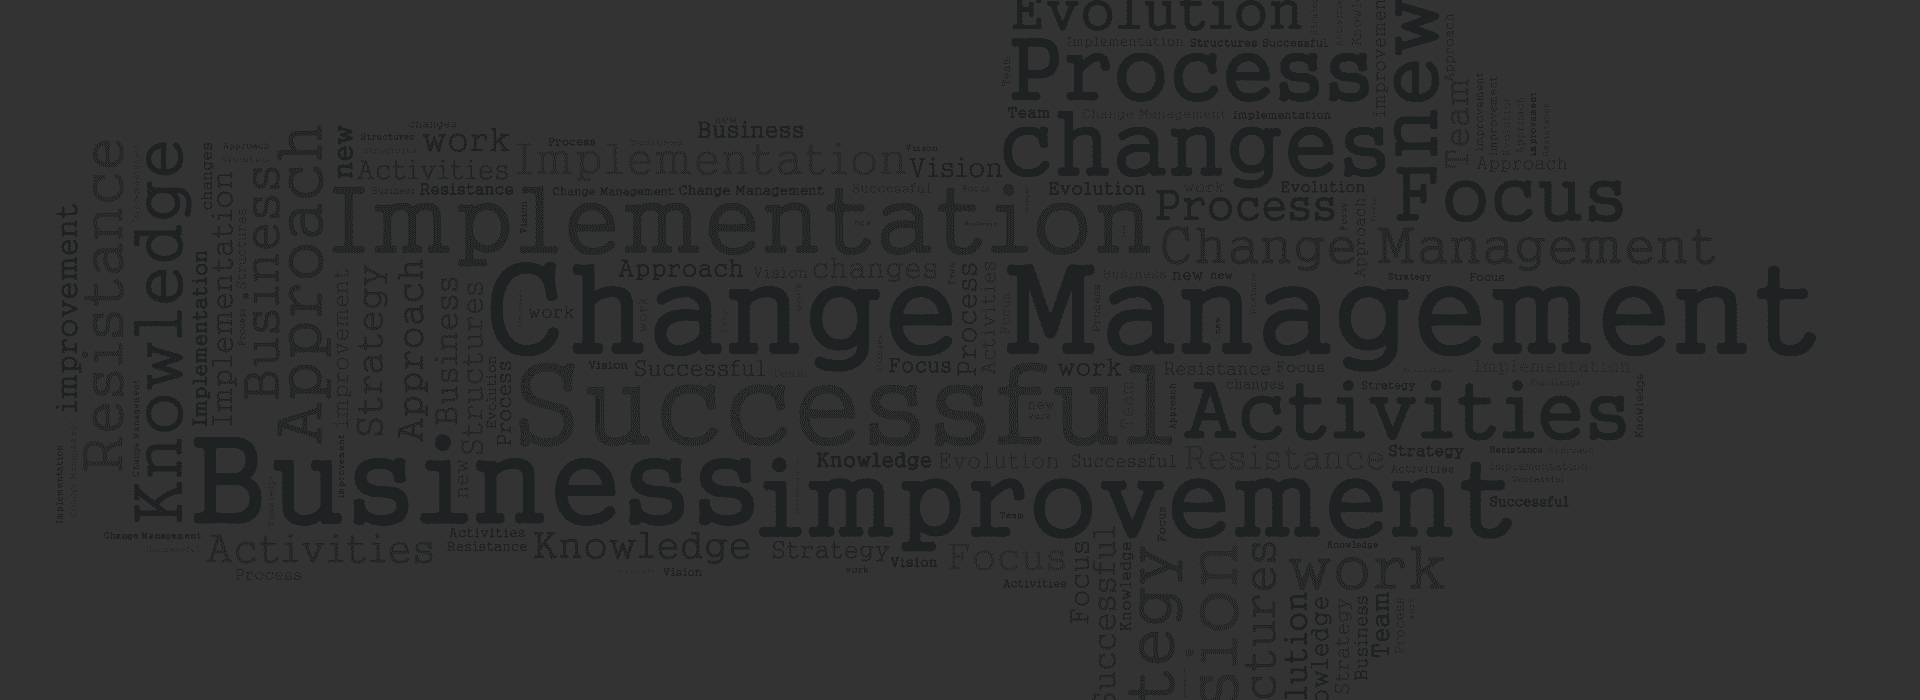 Change Management Tools